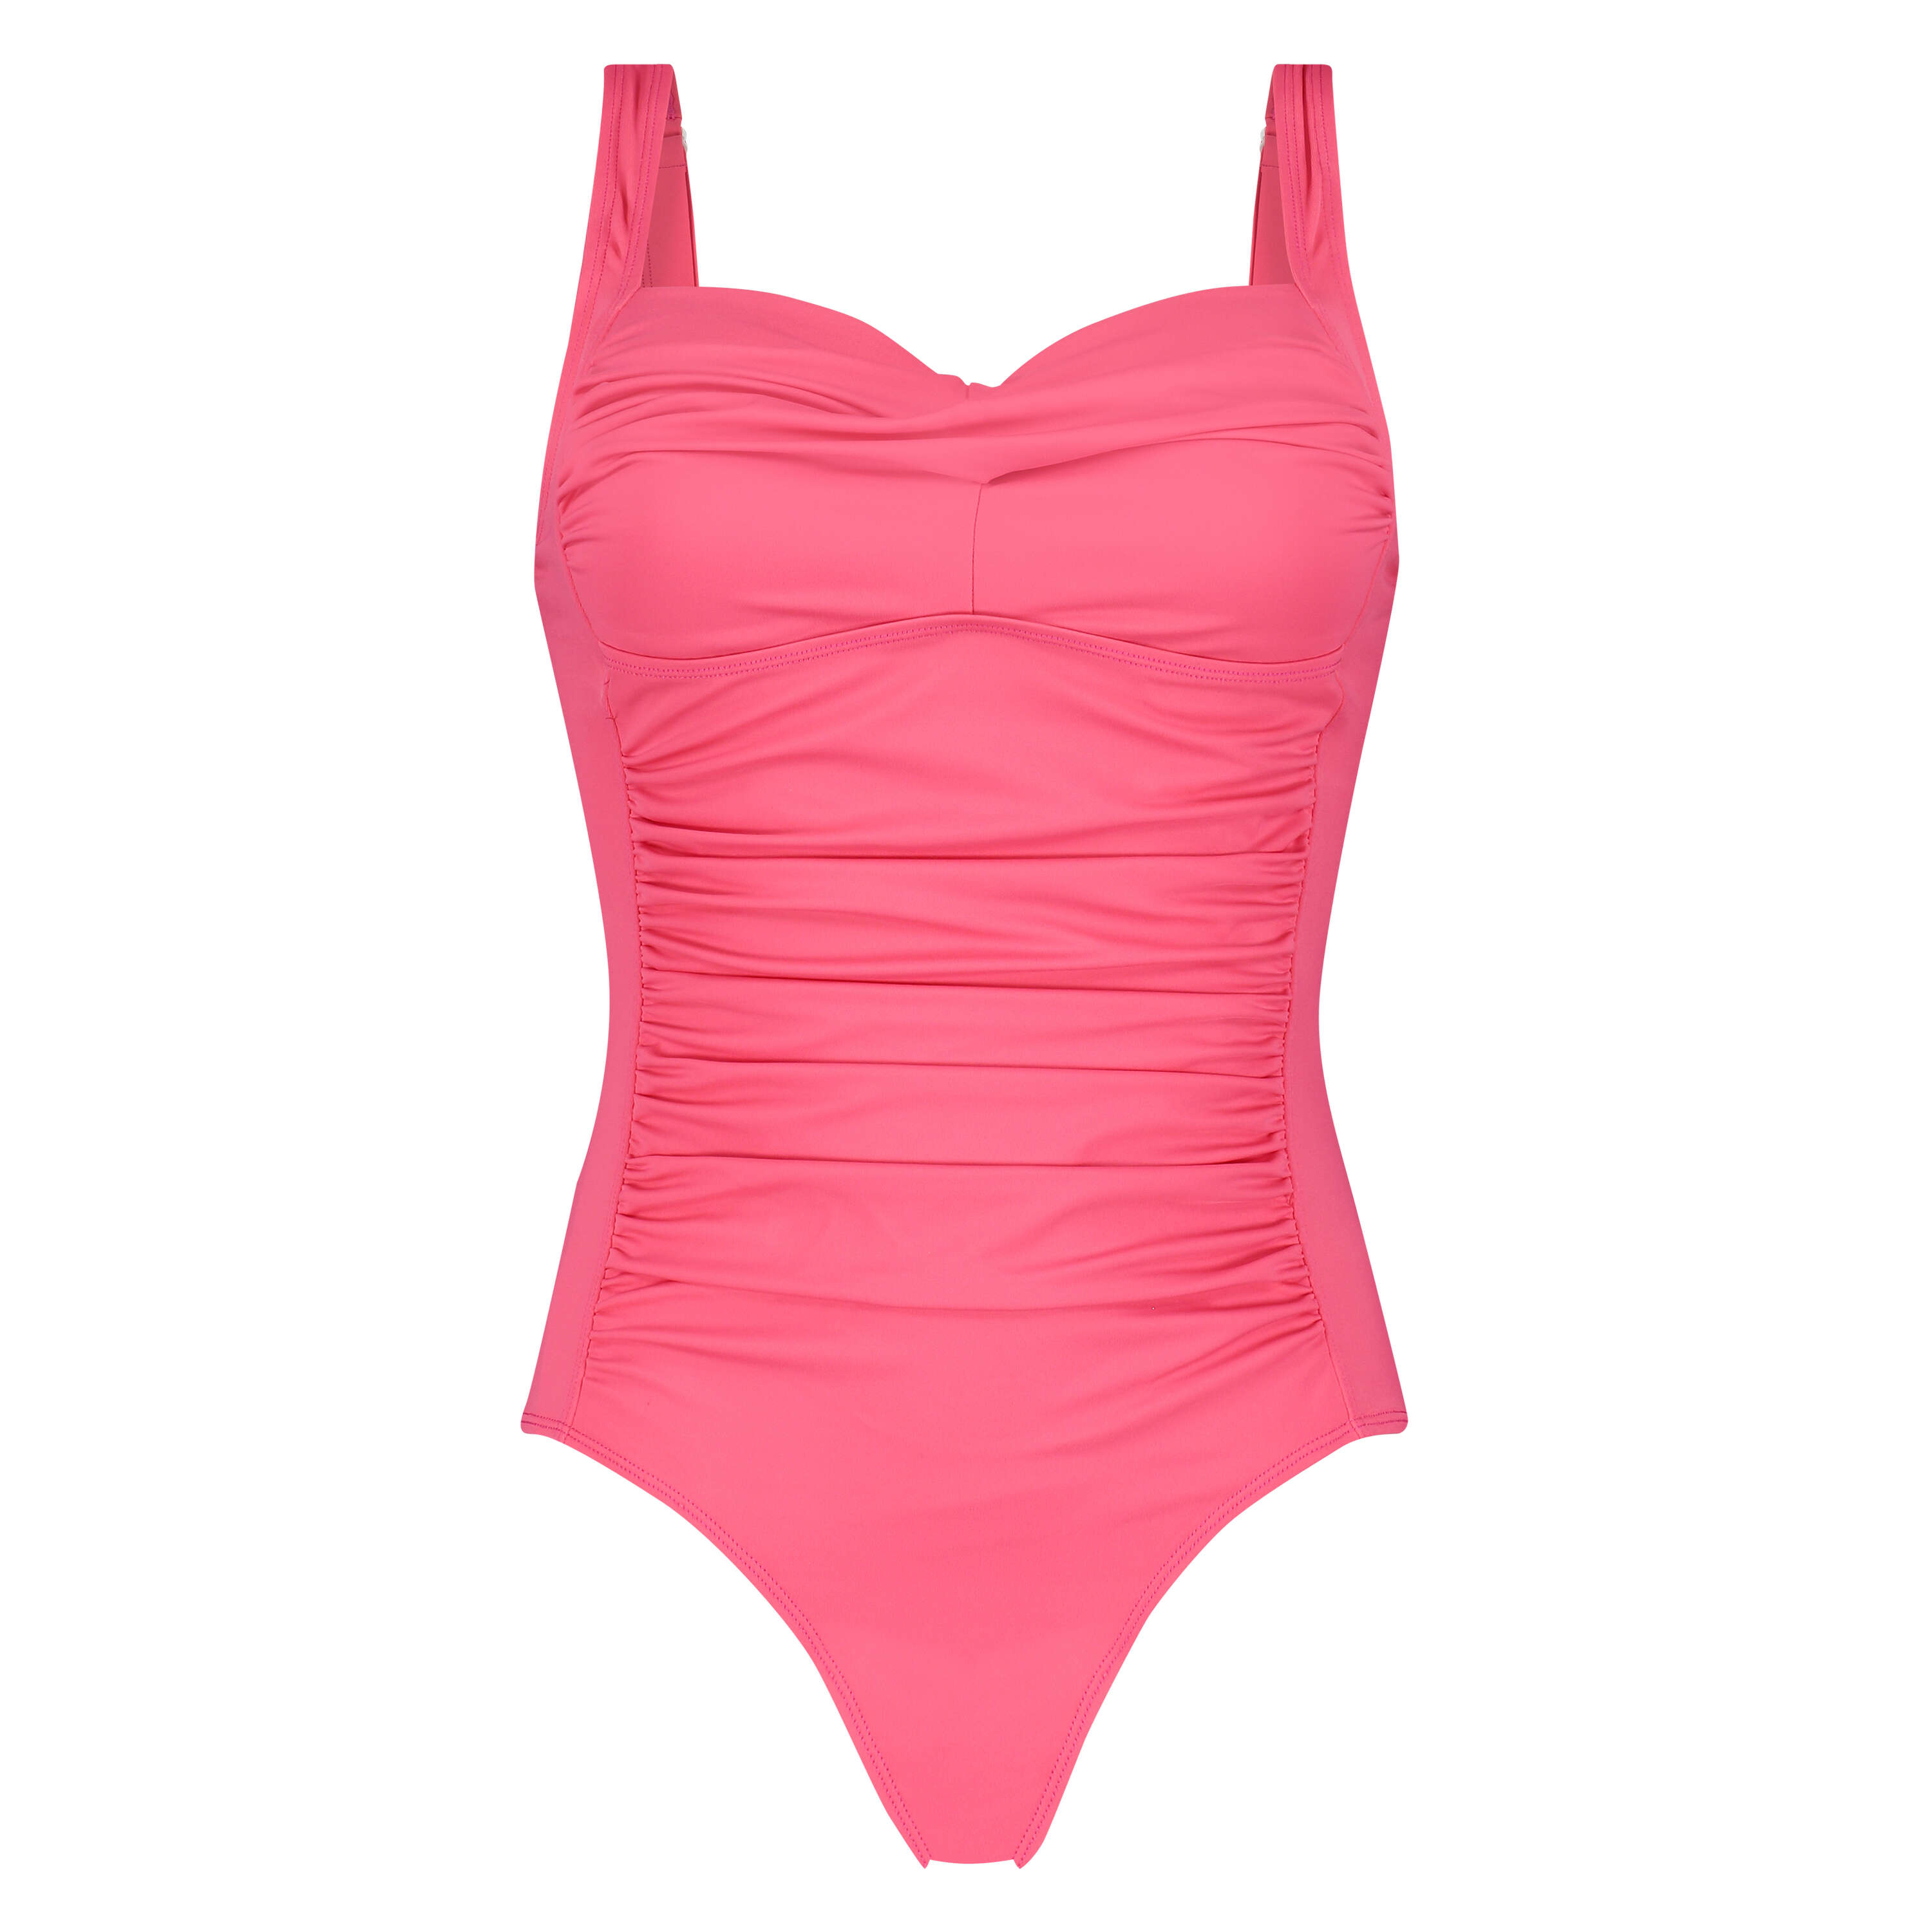 Sunset Dreams Ocean swimsuit, Pink, main